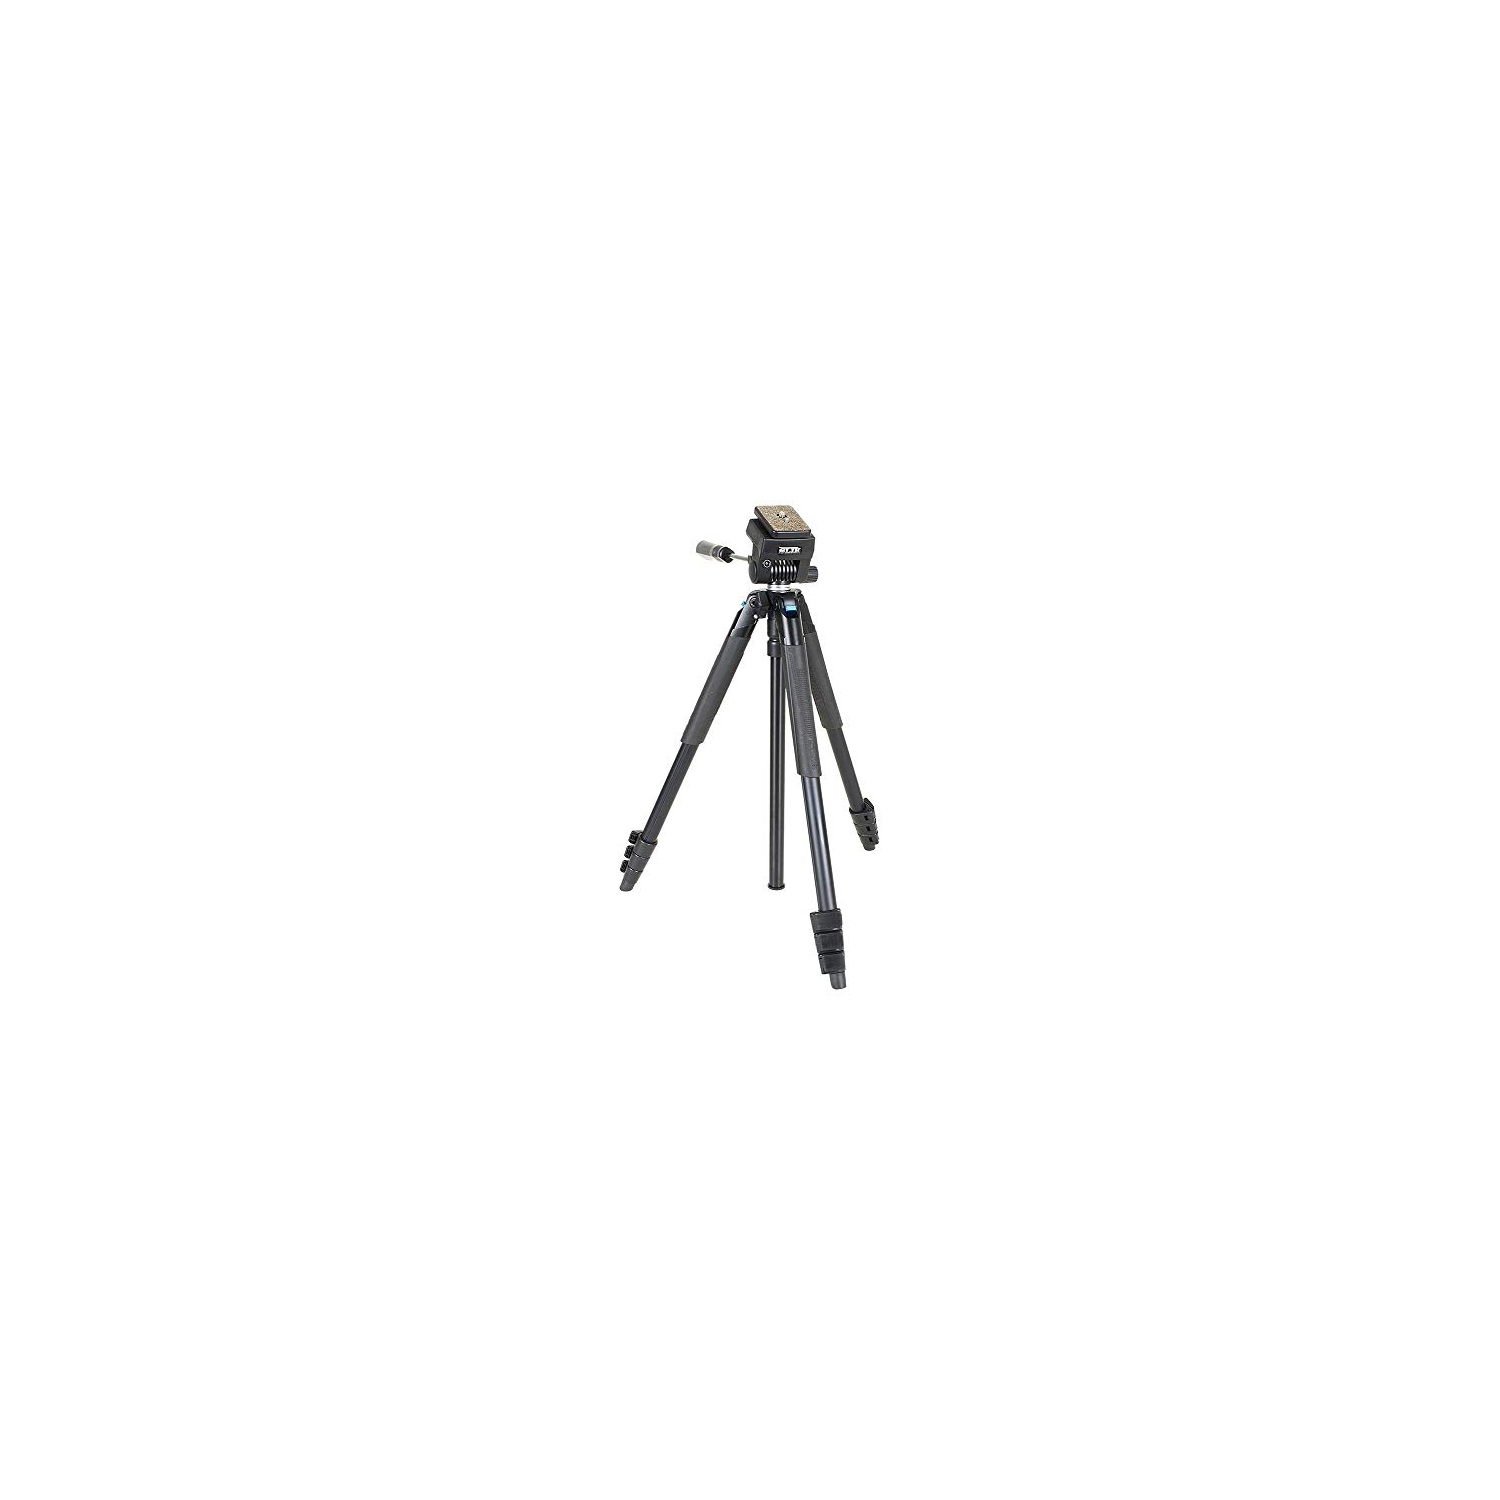 SLIK Video Sprint III w/Sprint Video Head for Mirrorless/DSLR Sony Nikon Canon Fuji Cameras and More - Black (617-521)